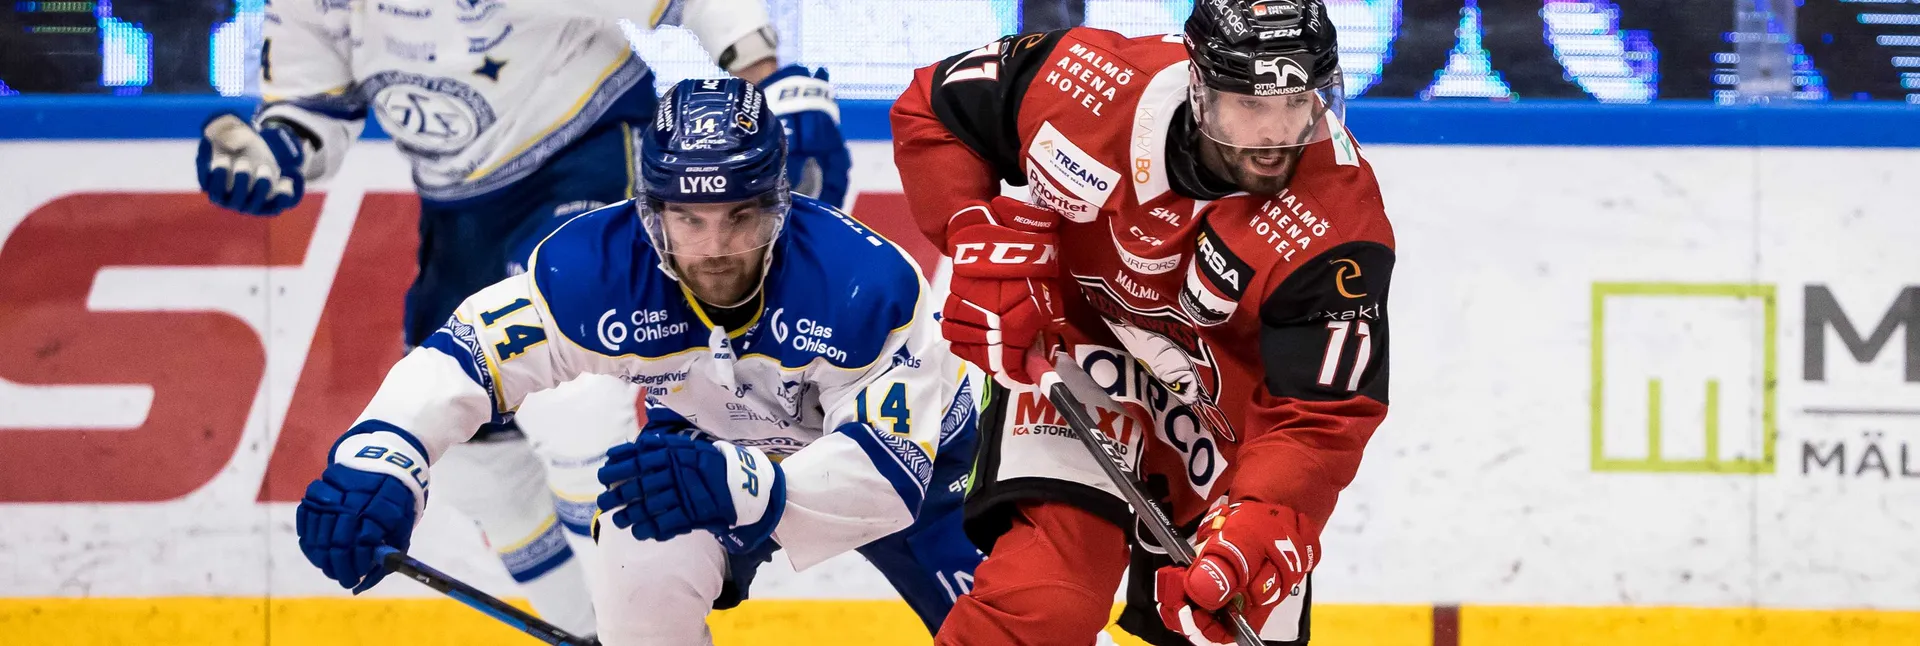 Ishockeymatch mellan  Leksand och Malmö i SHL